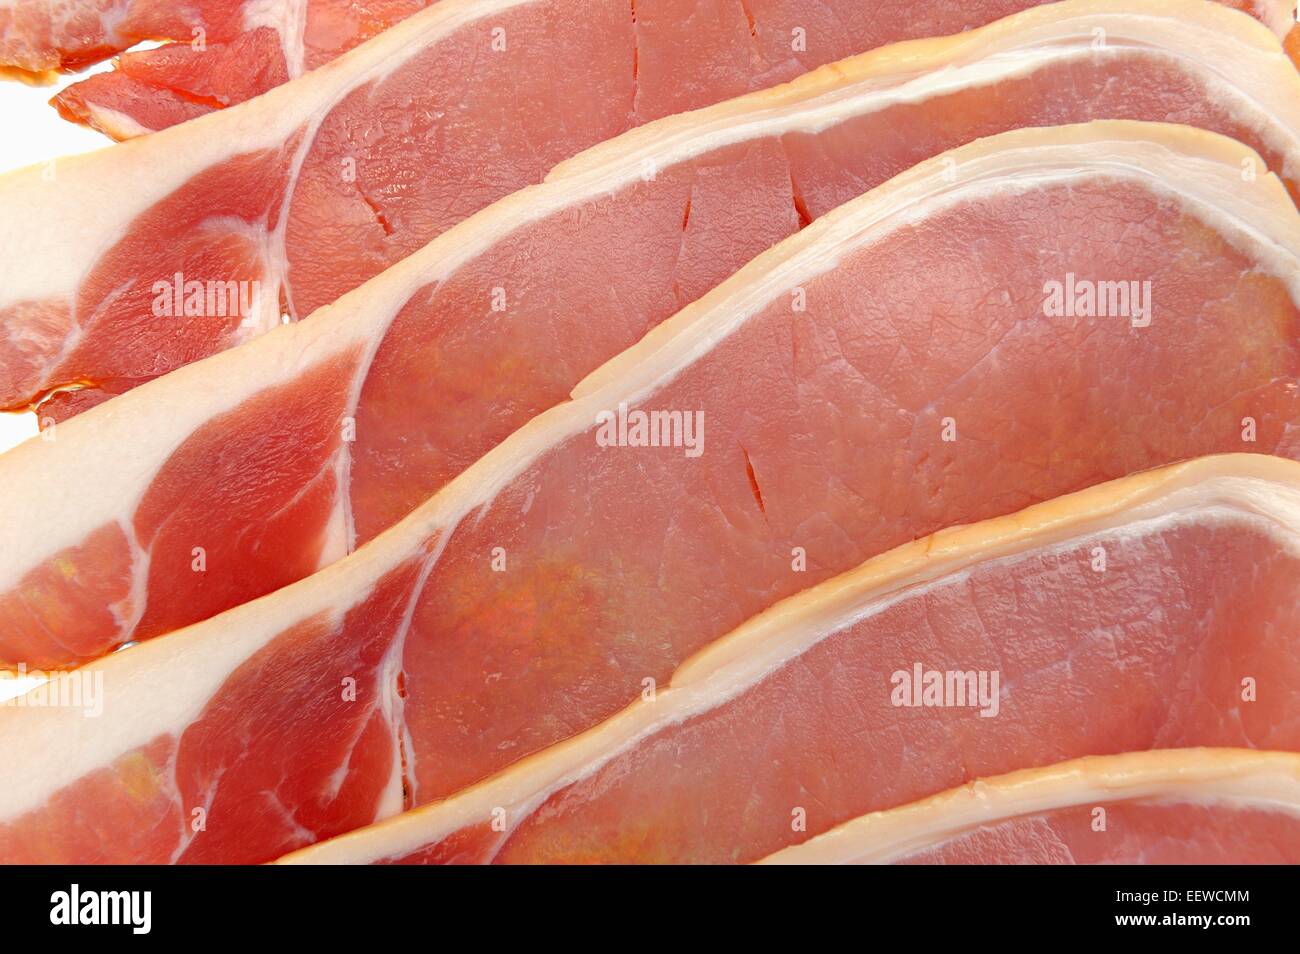 Rashers of raw uncooked smoked bacon Stock Photo